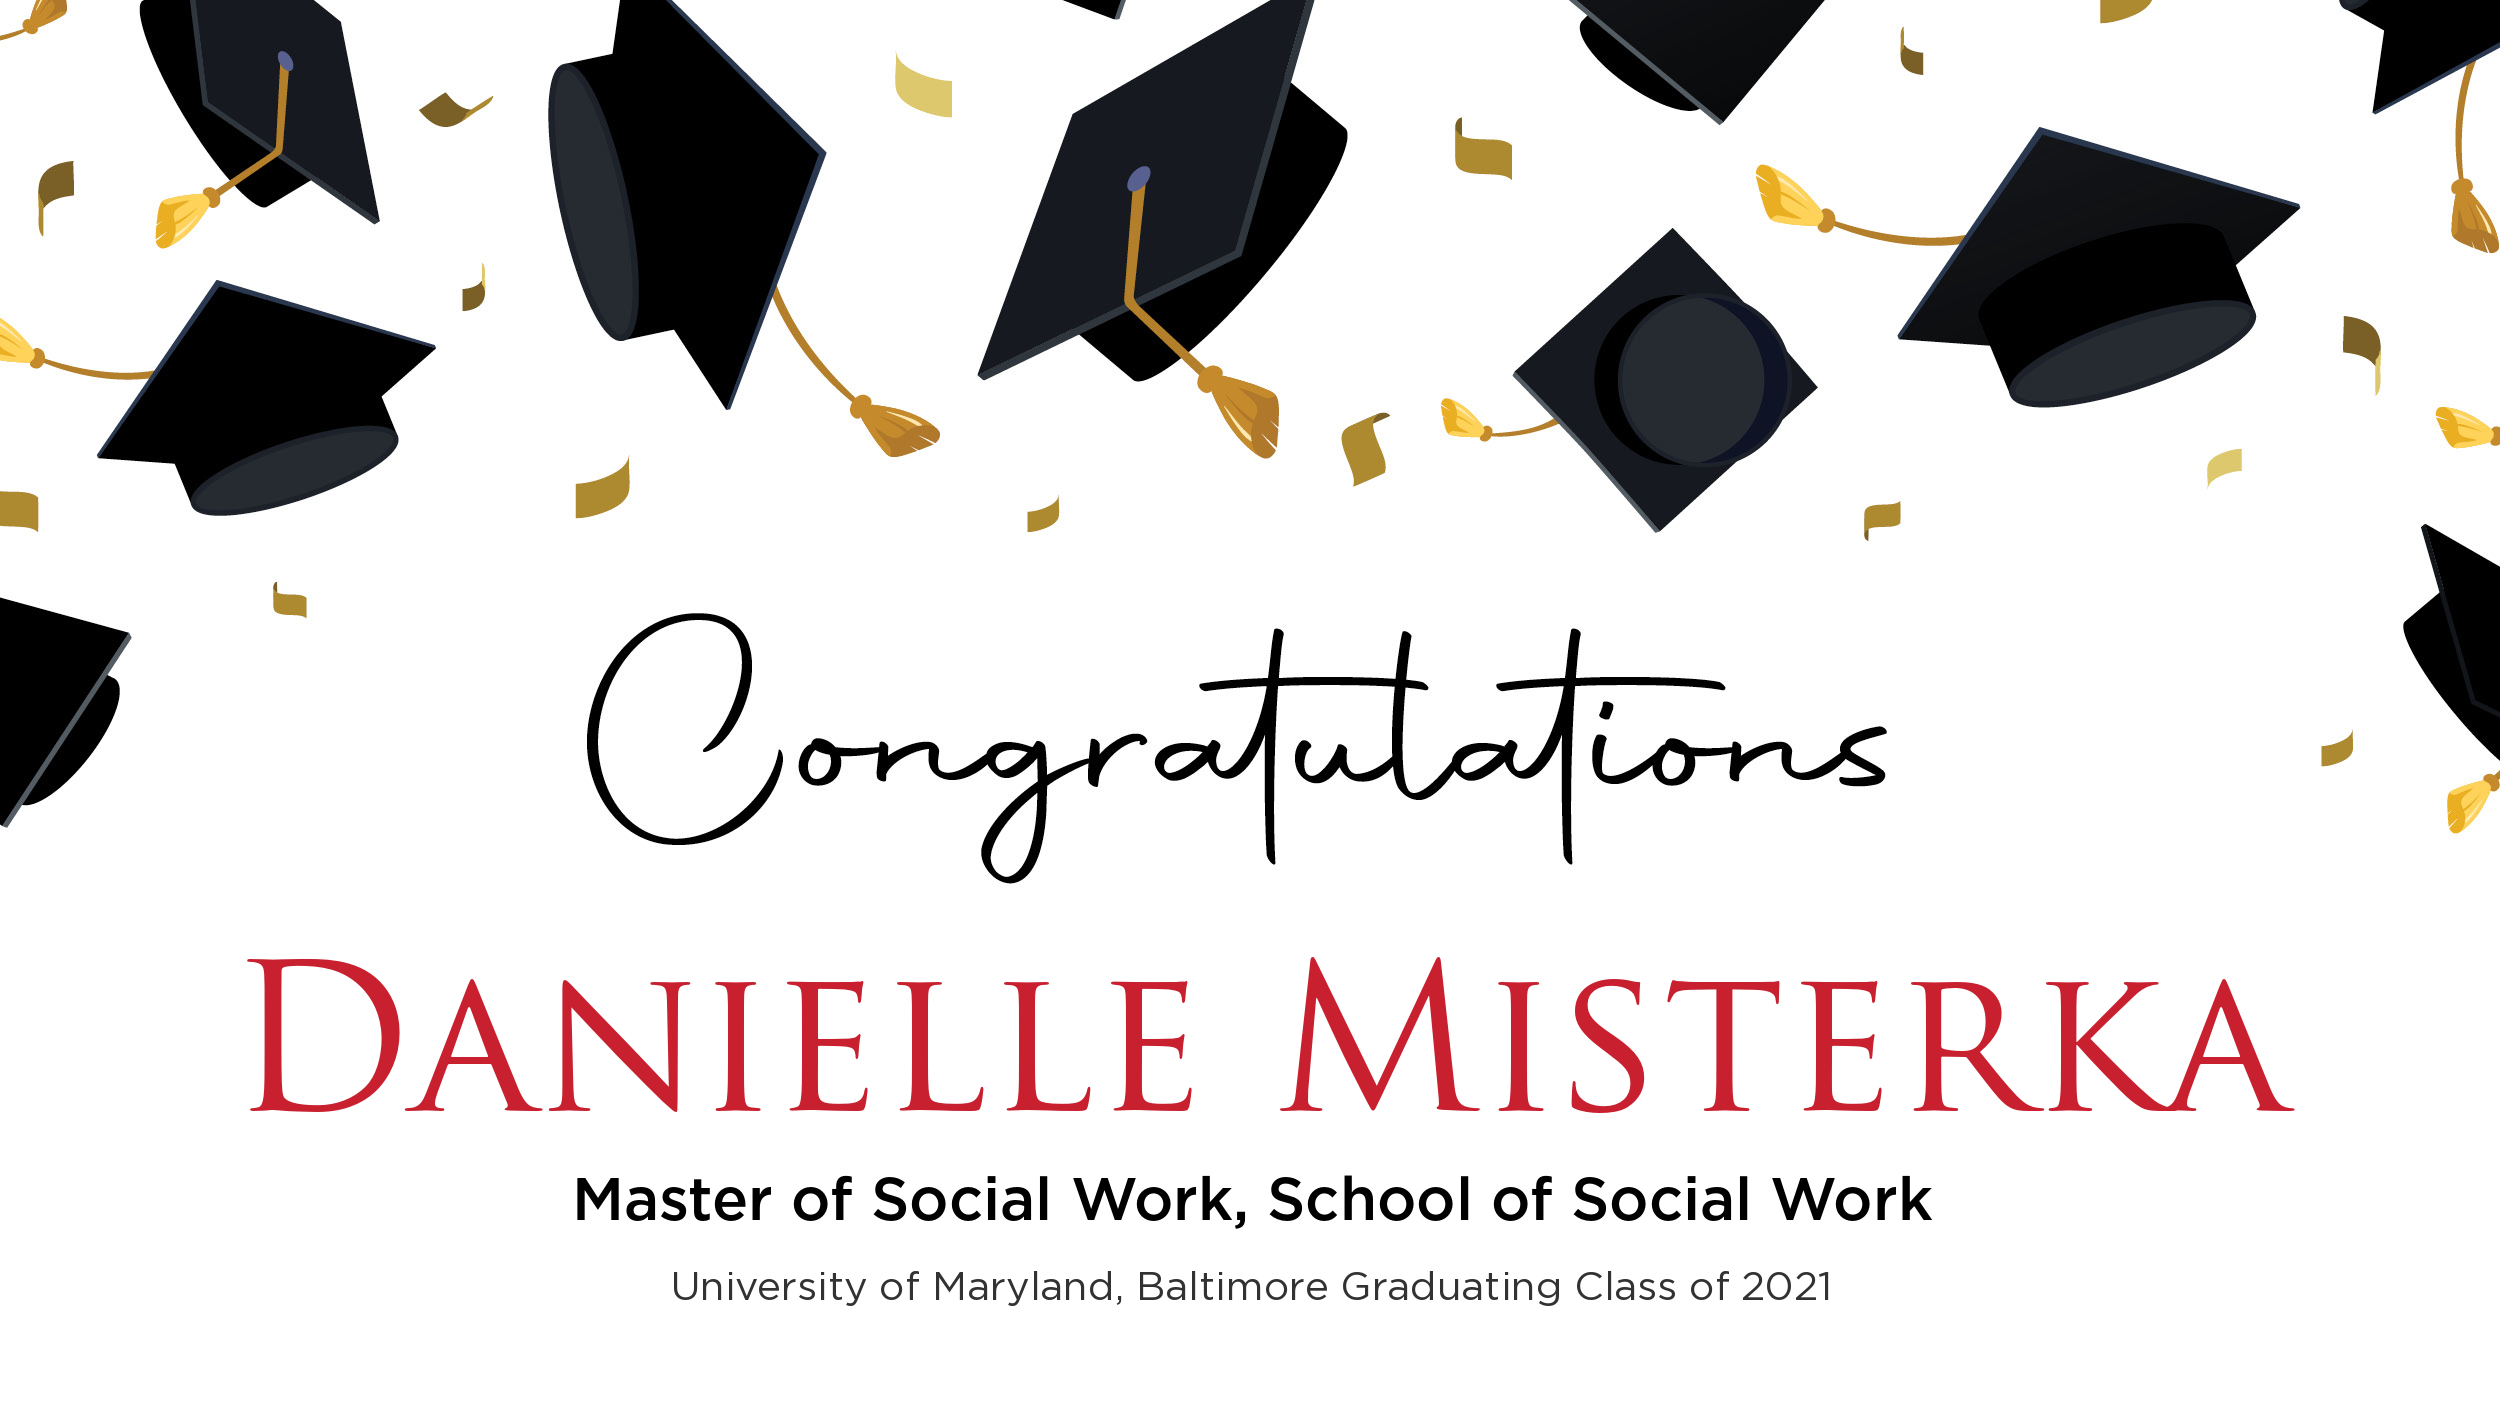 Congratulations Danielle Misterka, Master of Social Work